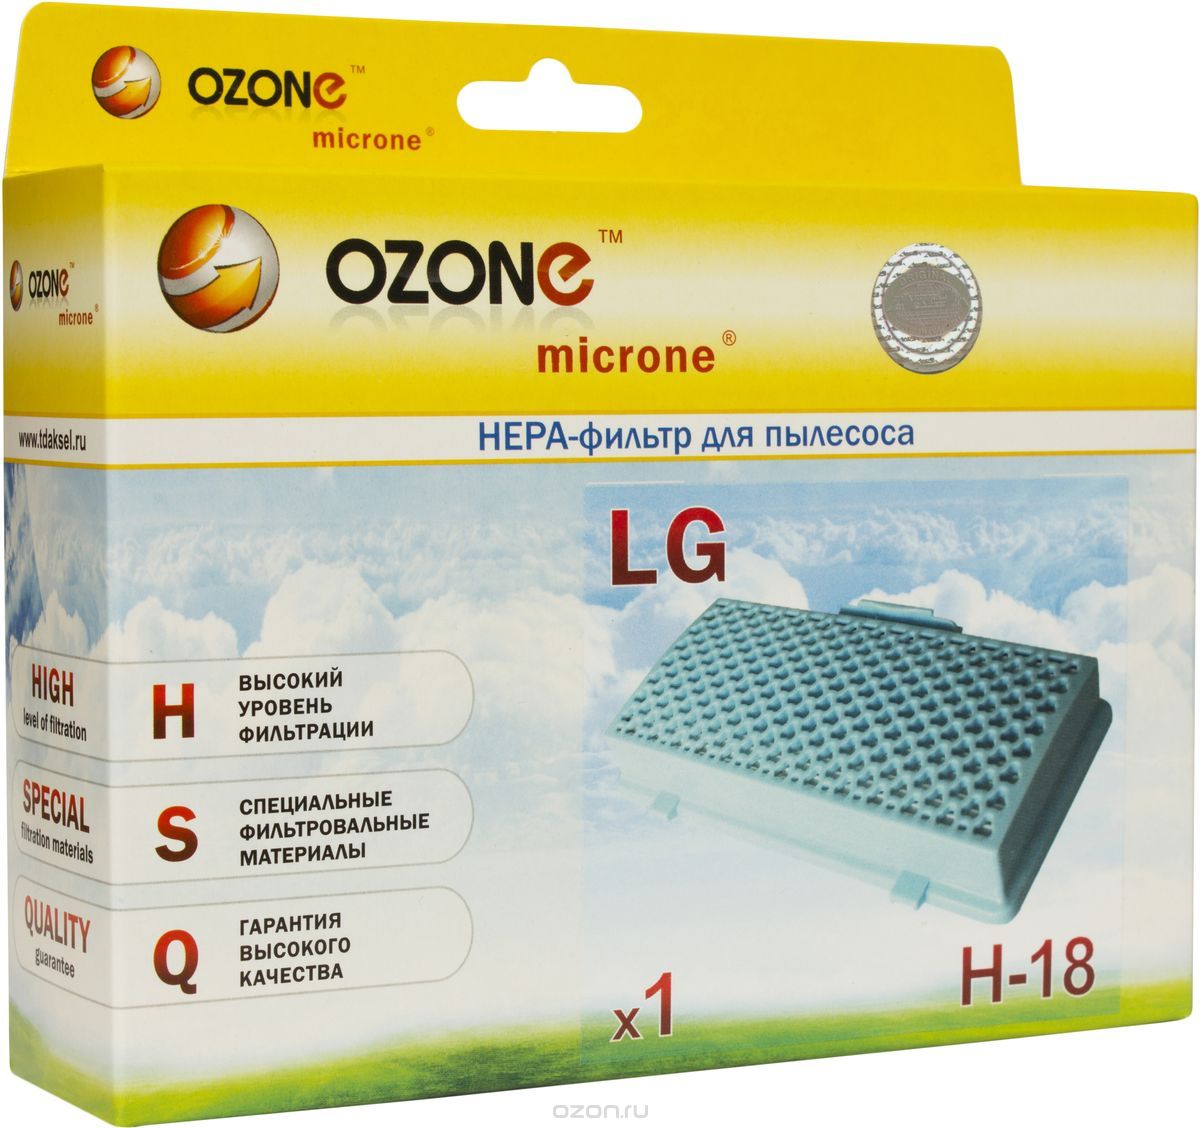 Ozone H-18     LG